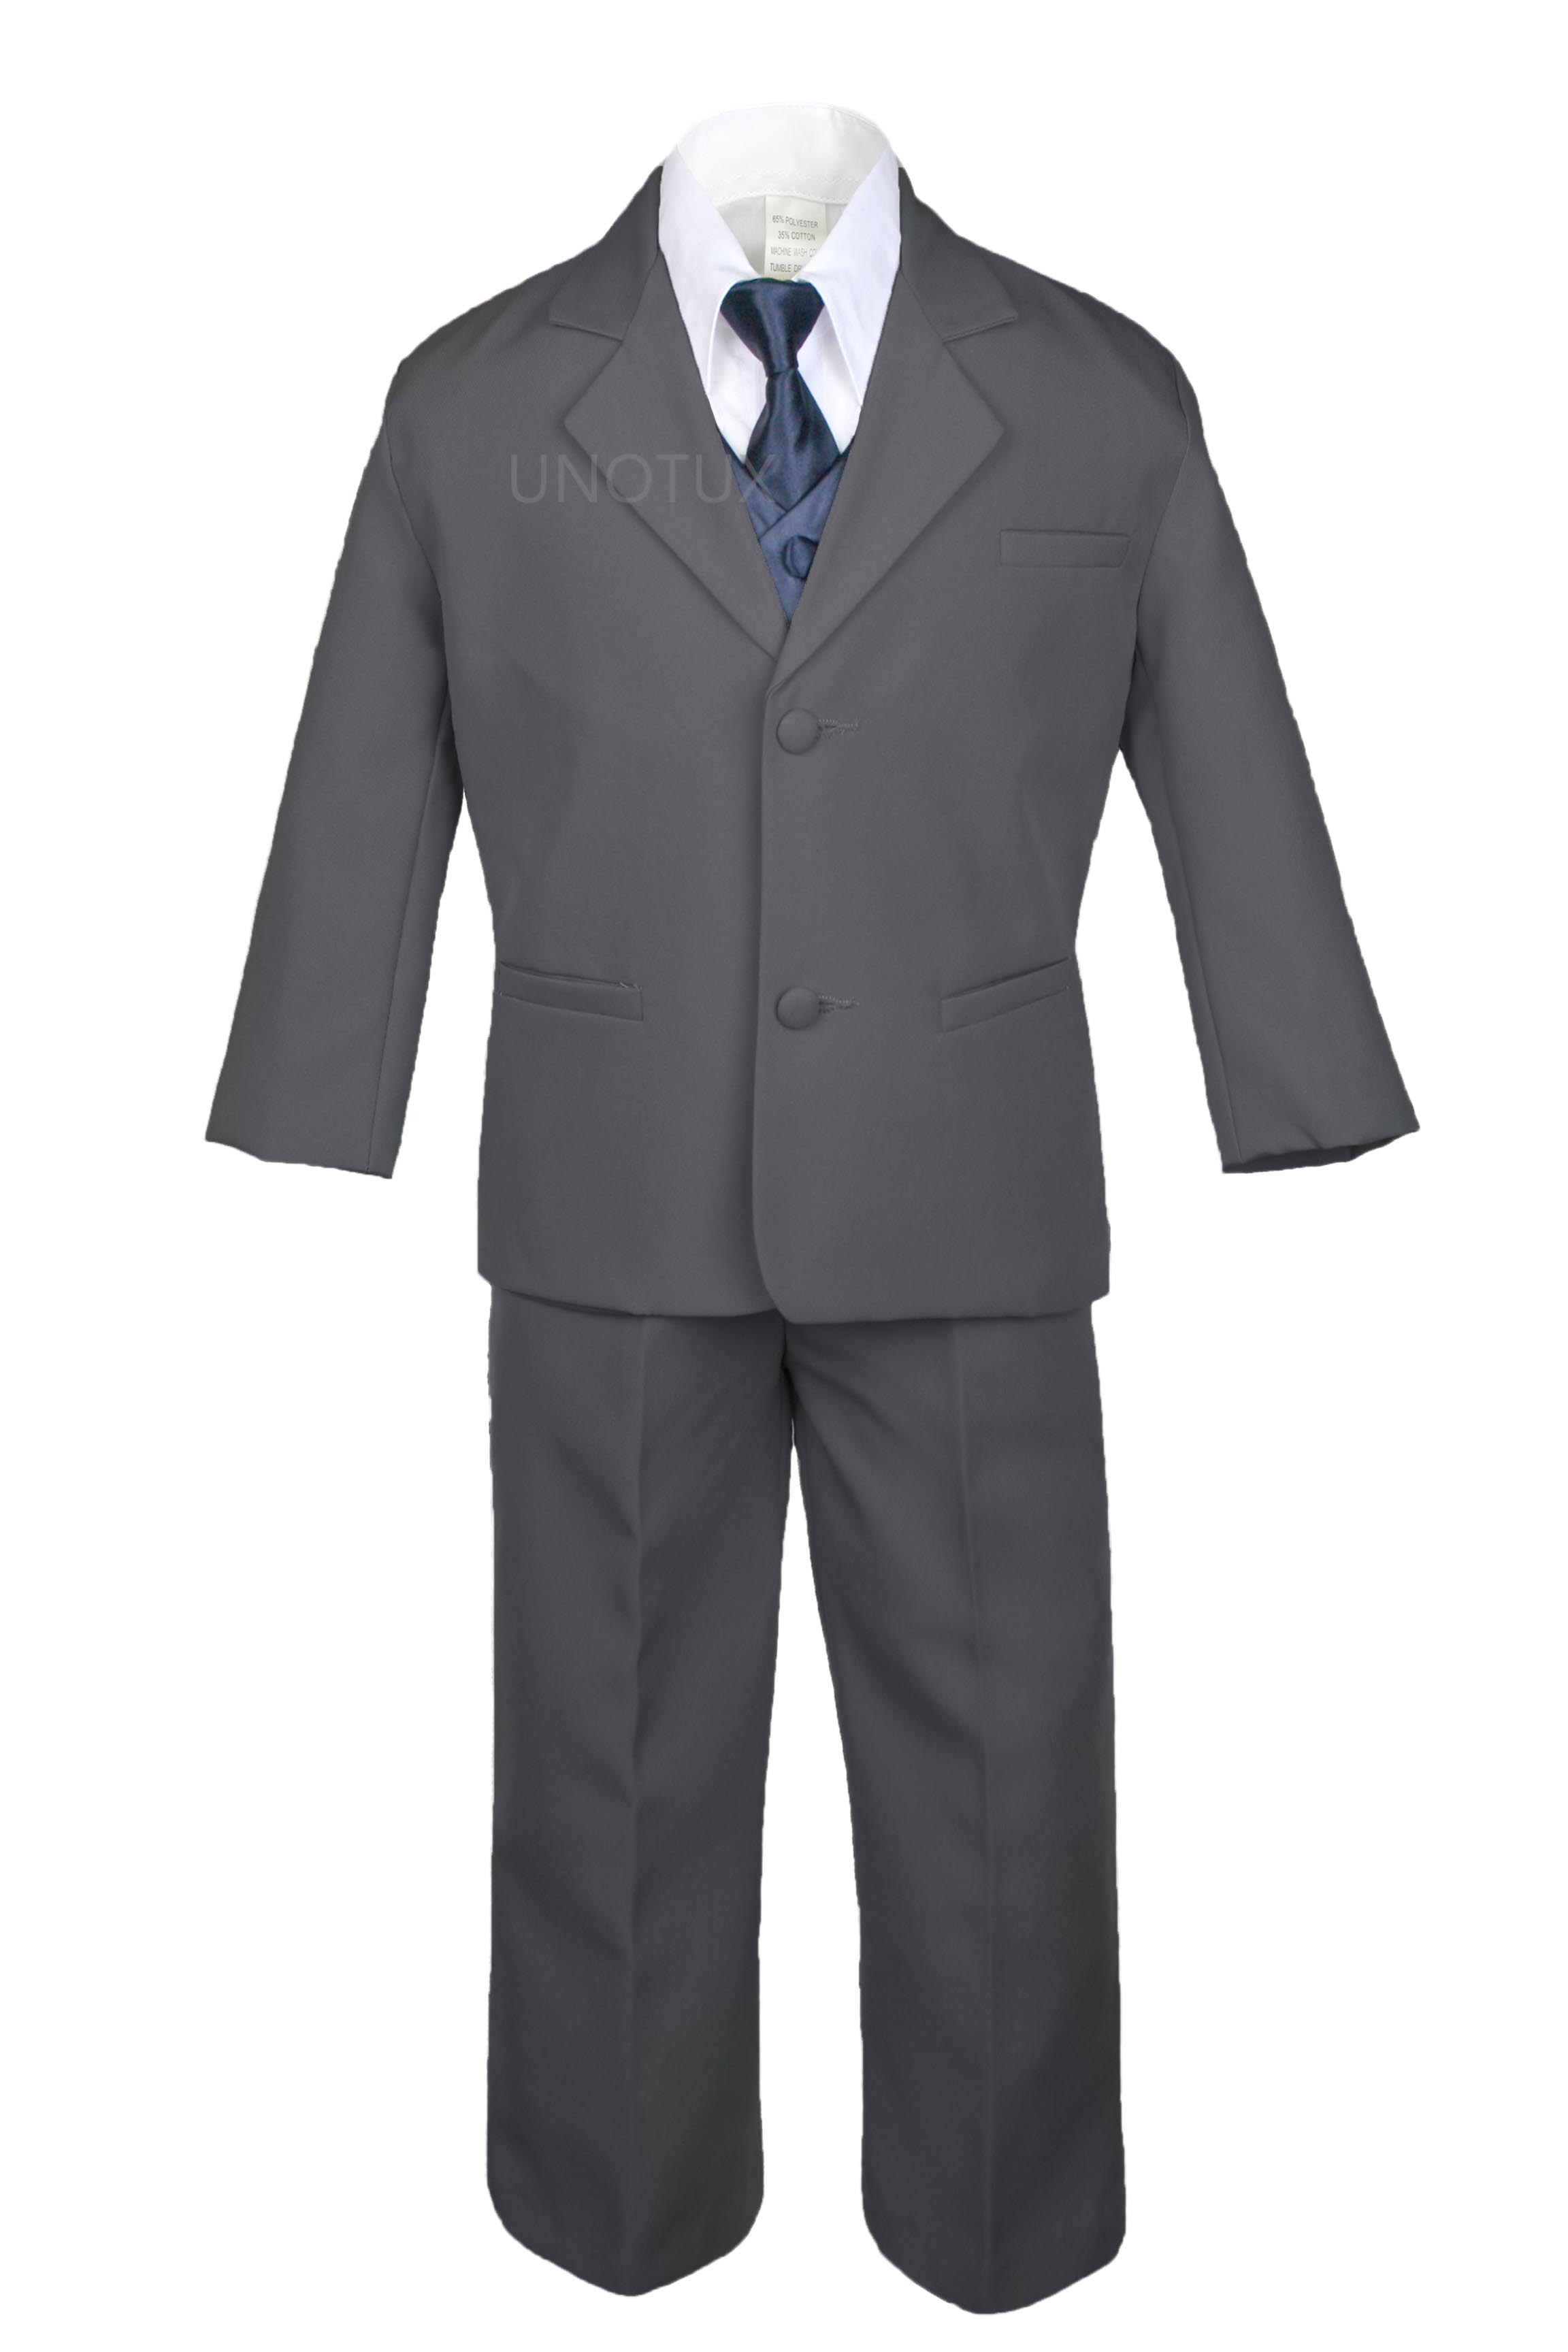 7pc S M L XL 2T 3T 4T Baby Toddler Boys Dark Grey Suits Tuxedo Formal Wedding Party Outfit Extra Satin Navy Necktie Vest Set